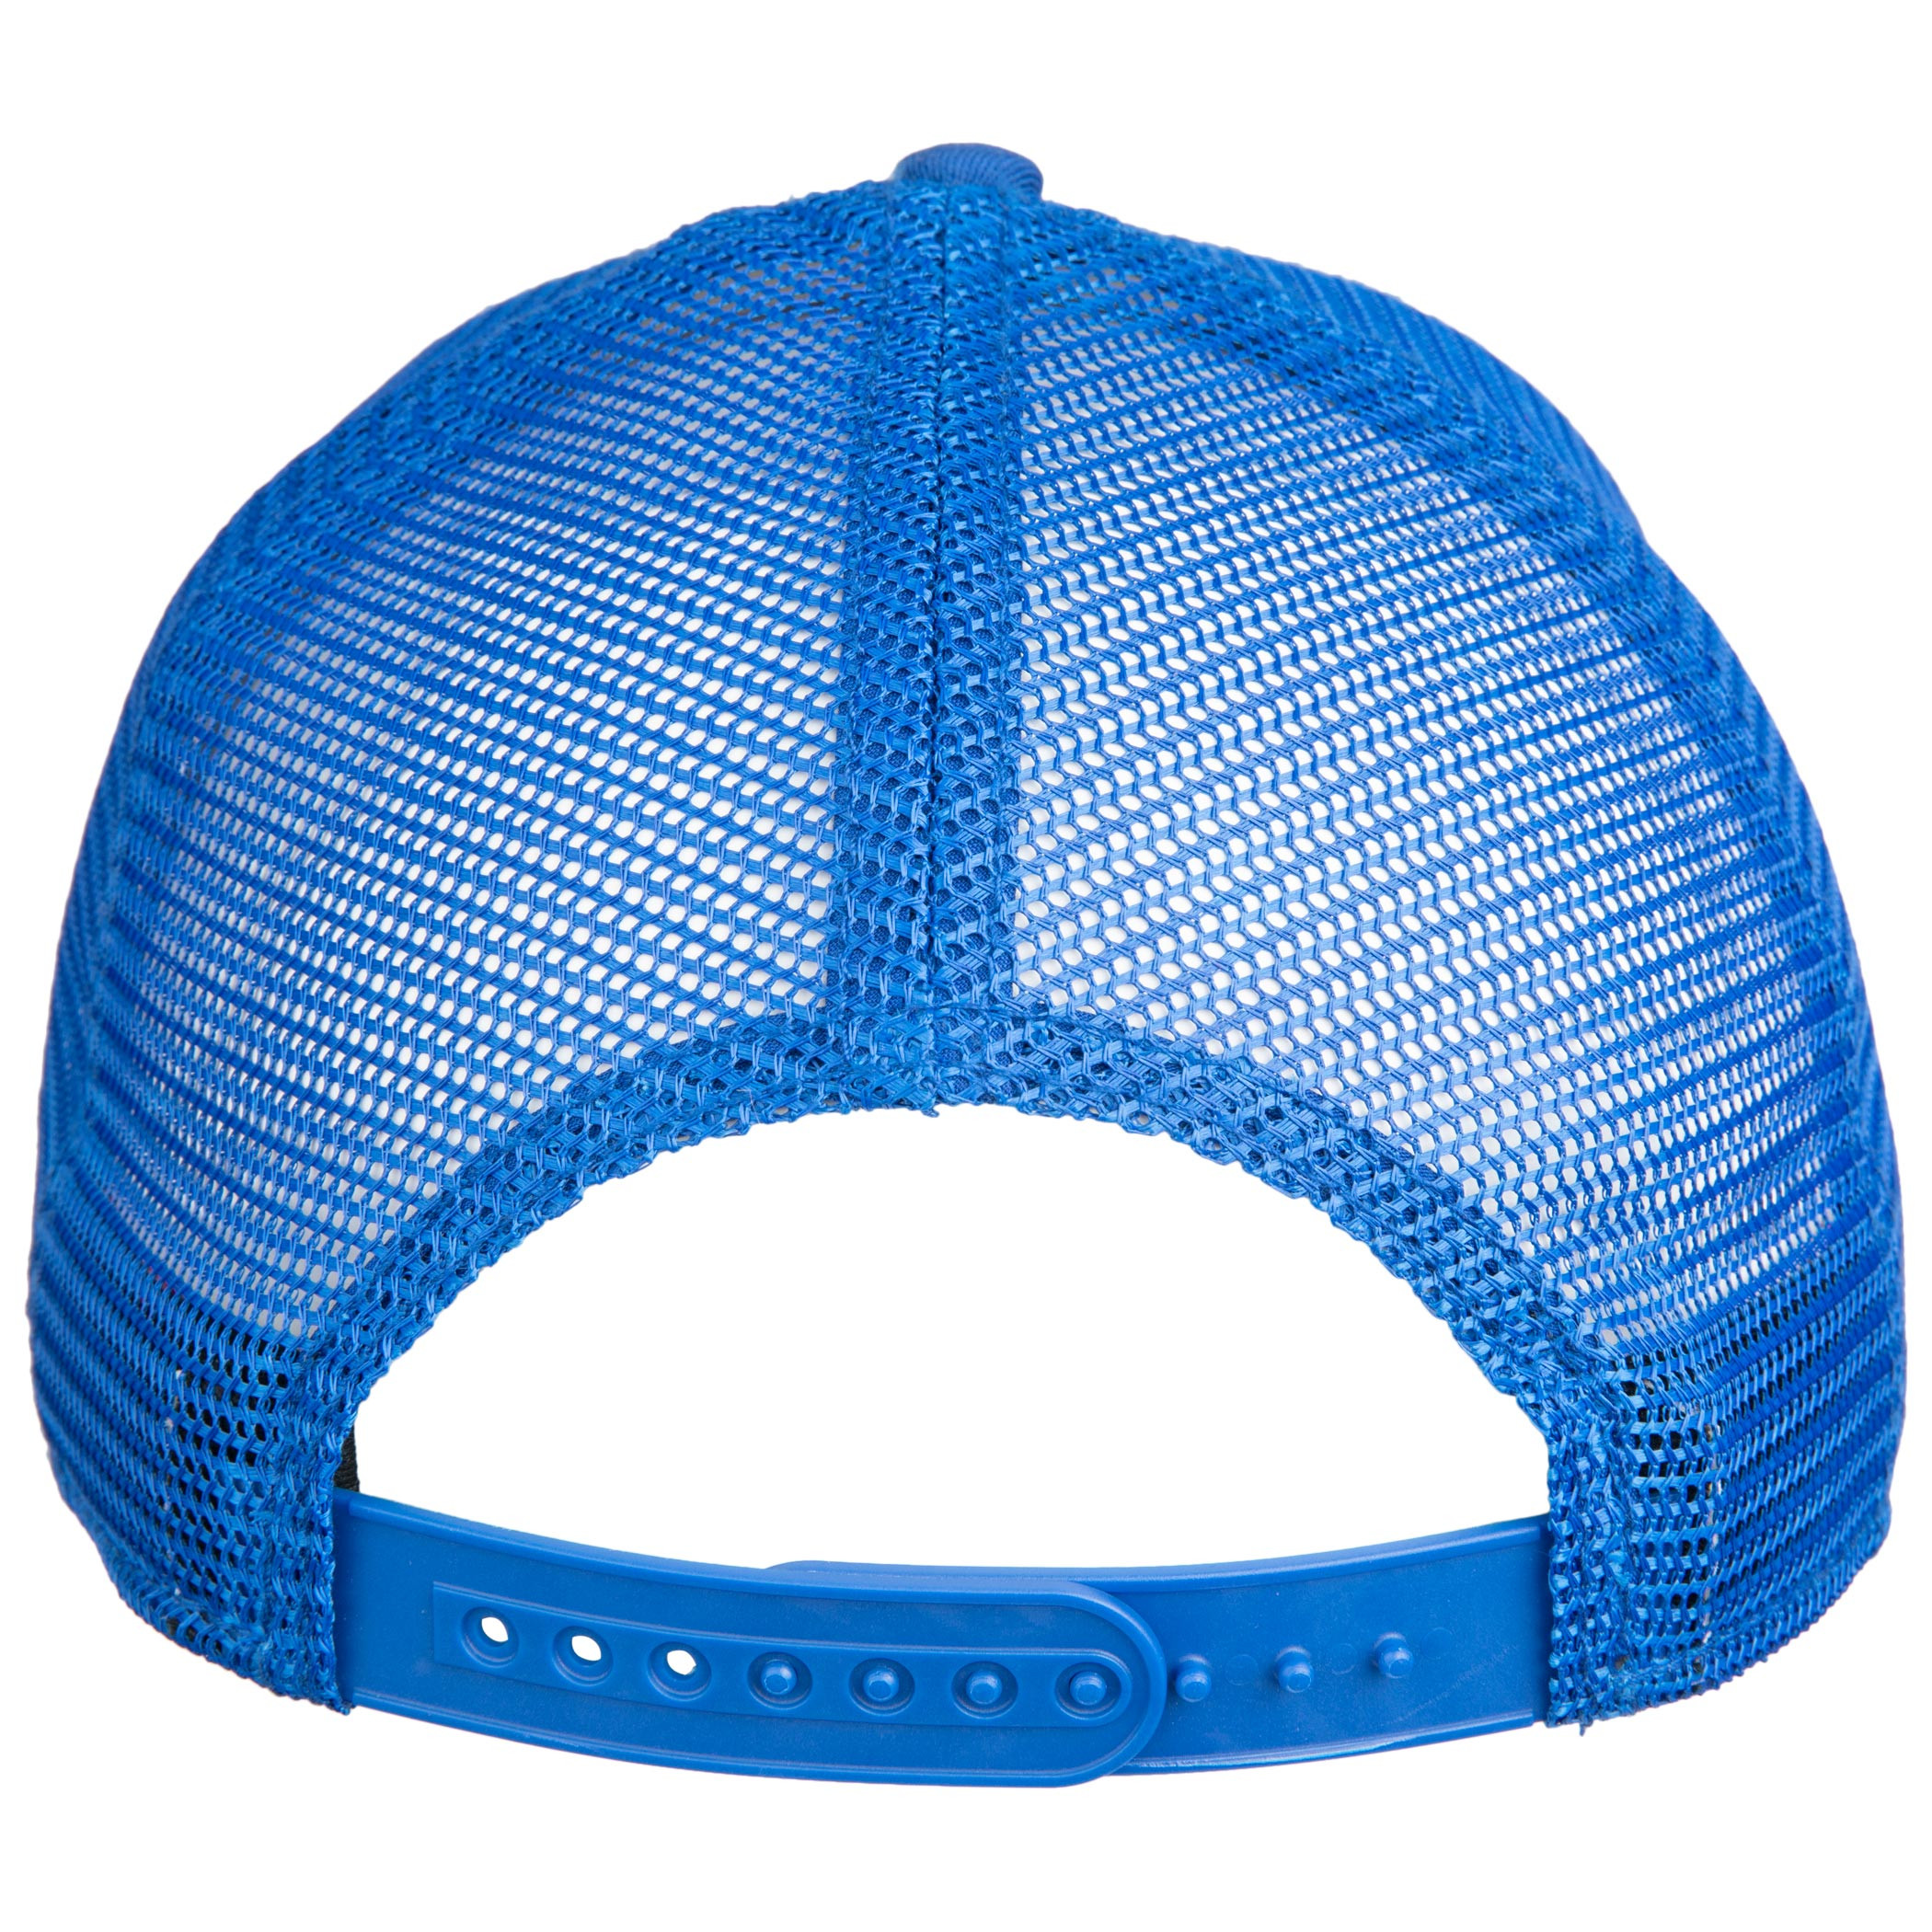 Pabst Blue Ribbon United States Logo Snapback Flat Bill Hat